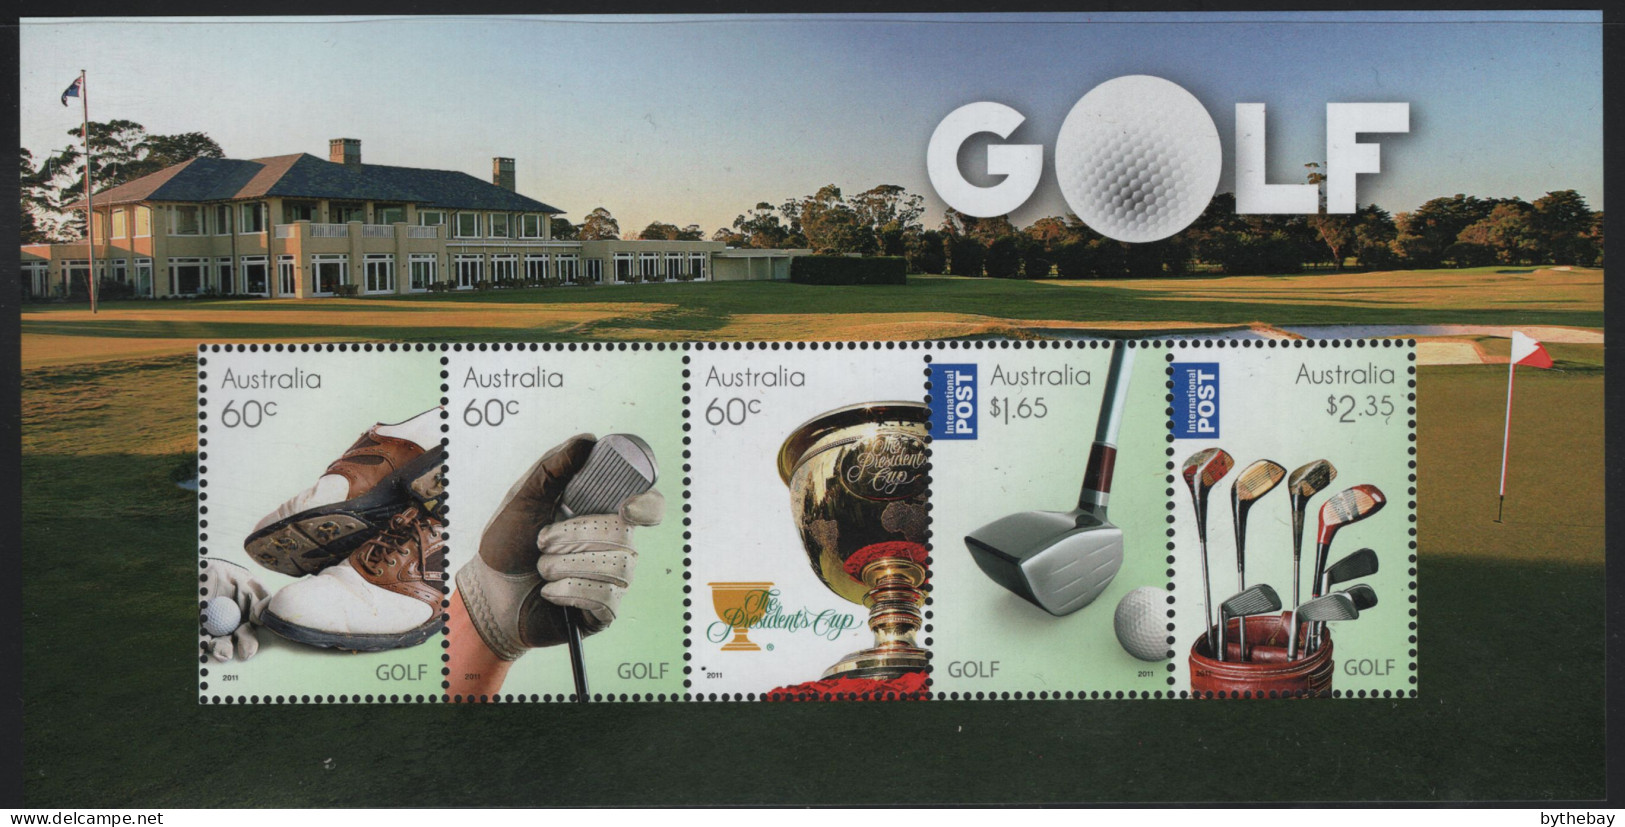 Australia 2011 MNH Sc 3569a Presidents Cup Golf Tournament Sheet - Mint Stamps